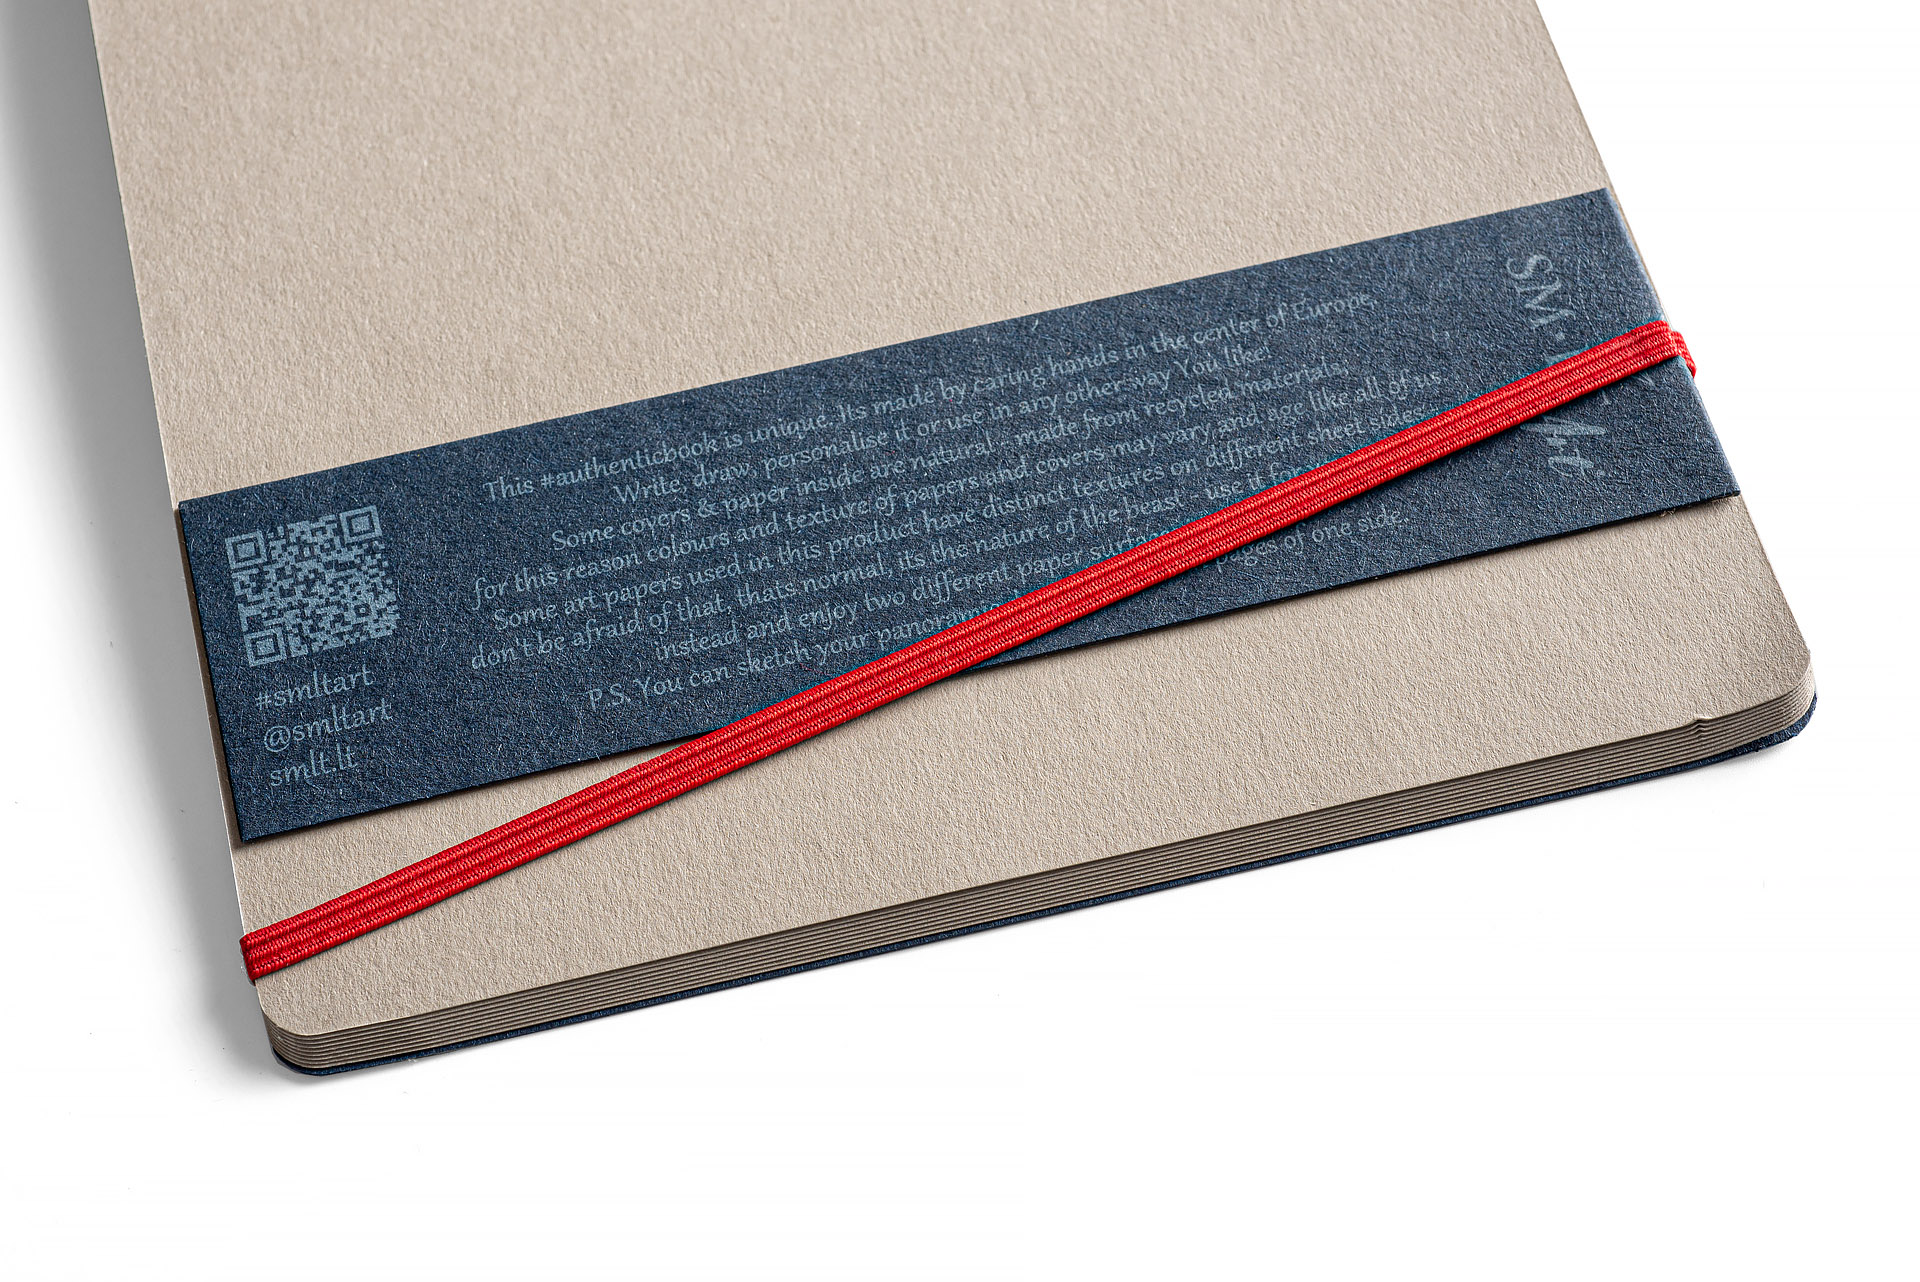 SMLT Art - Stitched Bristol Paper Album #SMLT5EB18ST